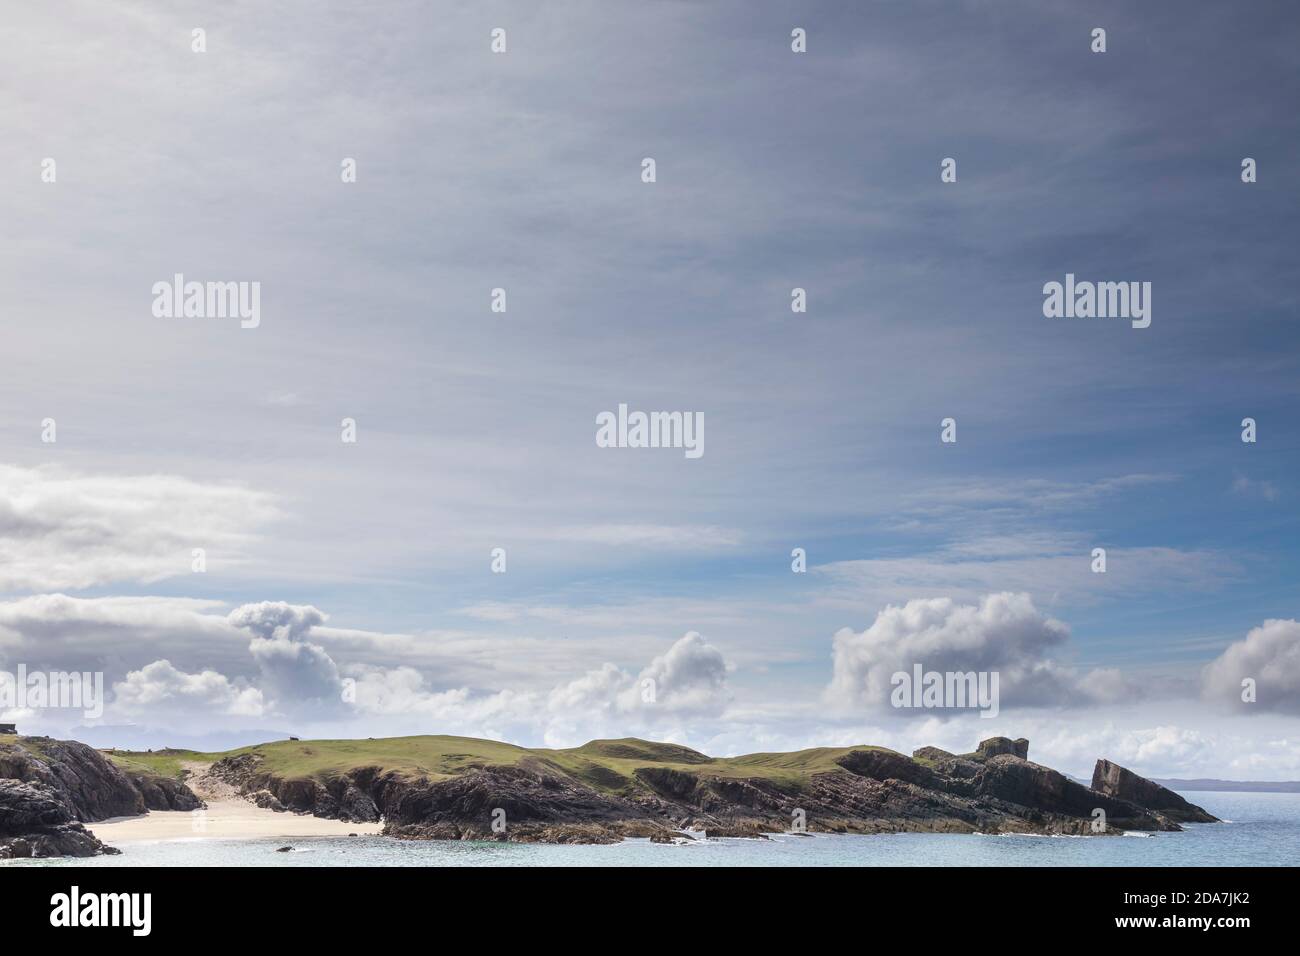 La famosa "roca de la plit" en la playa de Clachtoll, Escocia. Foto de stock